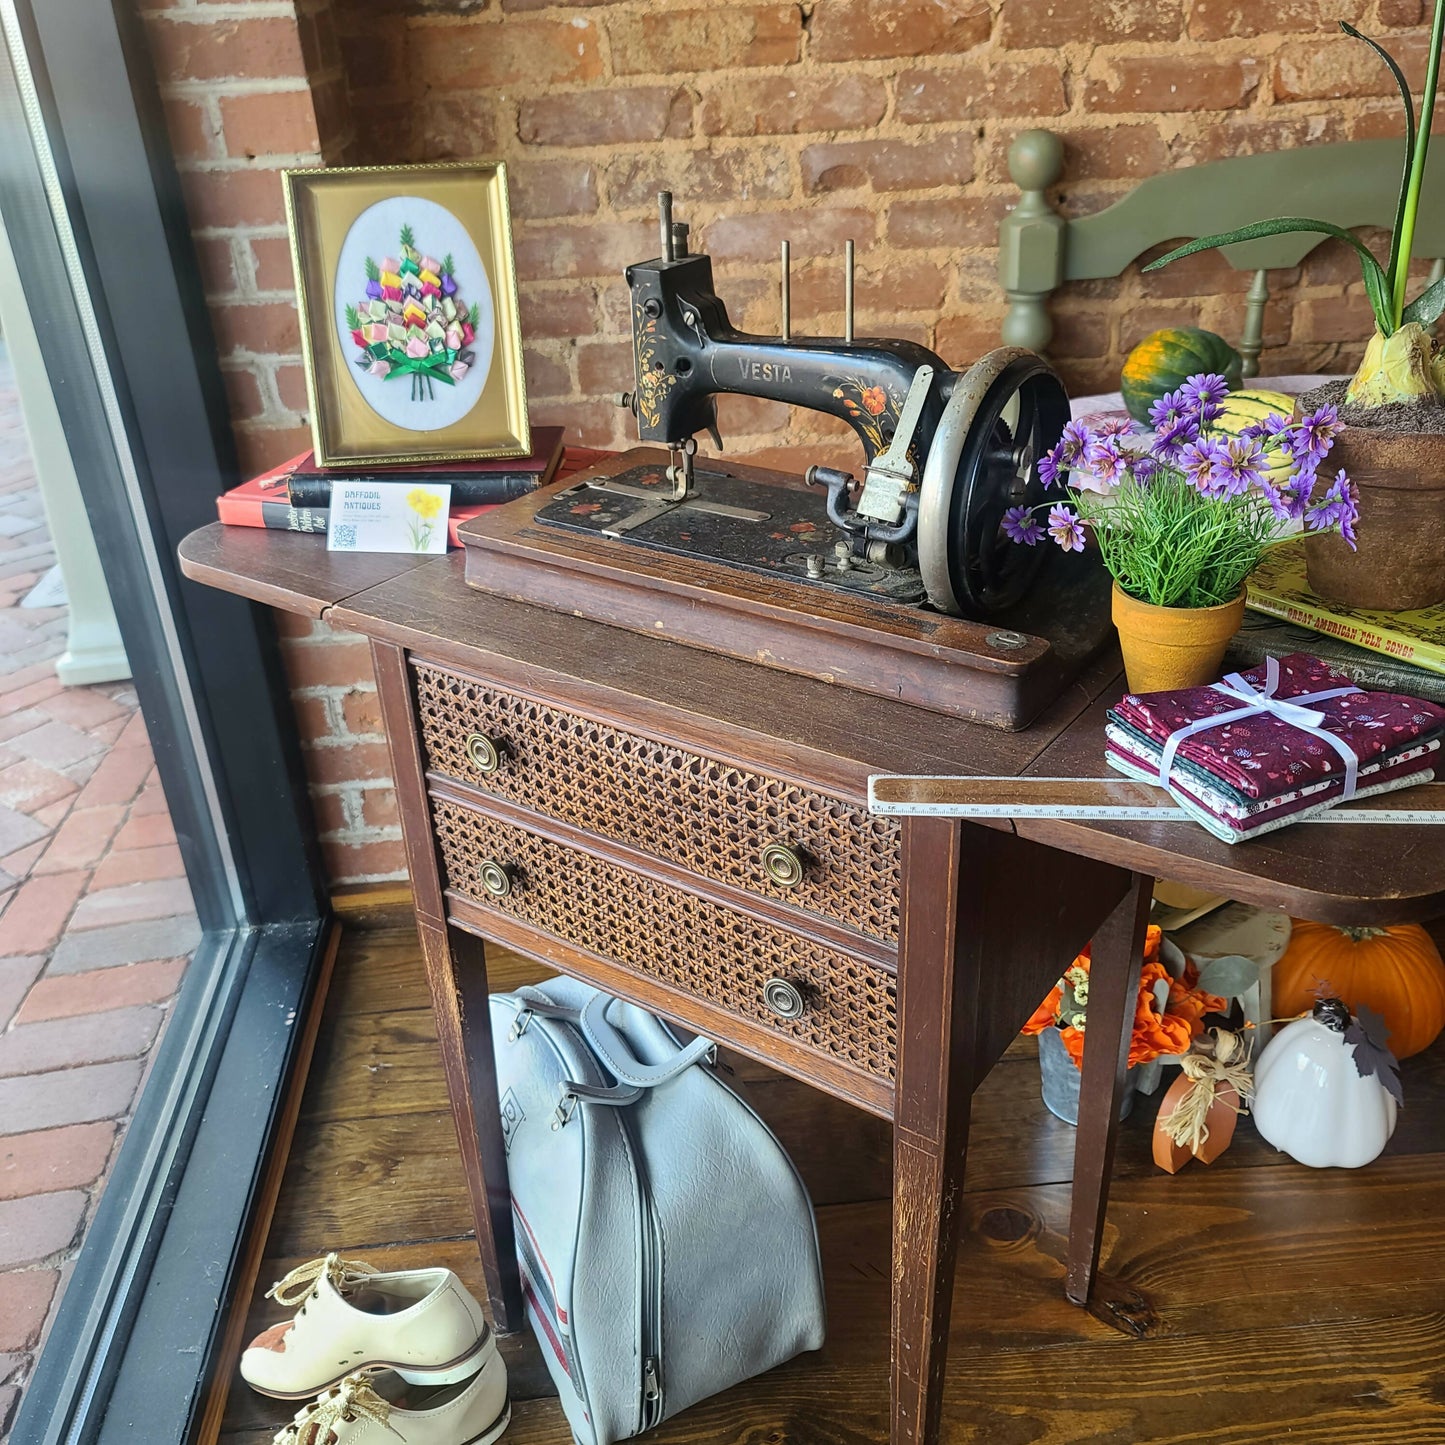 Vesta Sewing Machine & Table